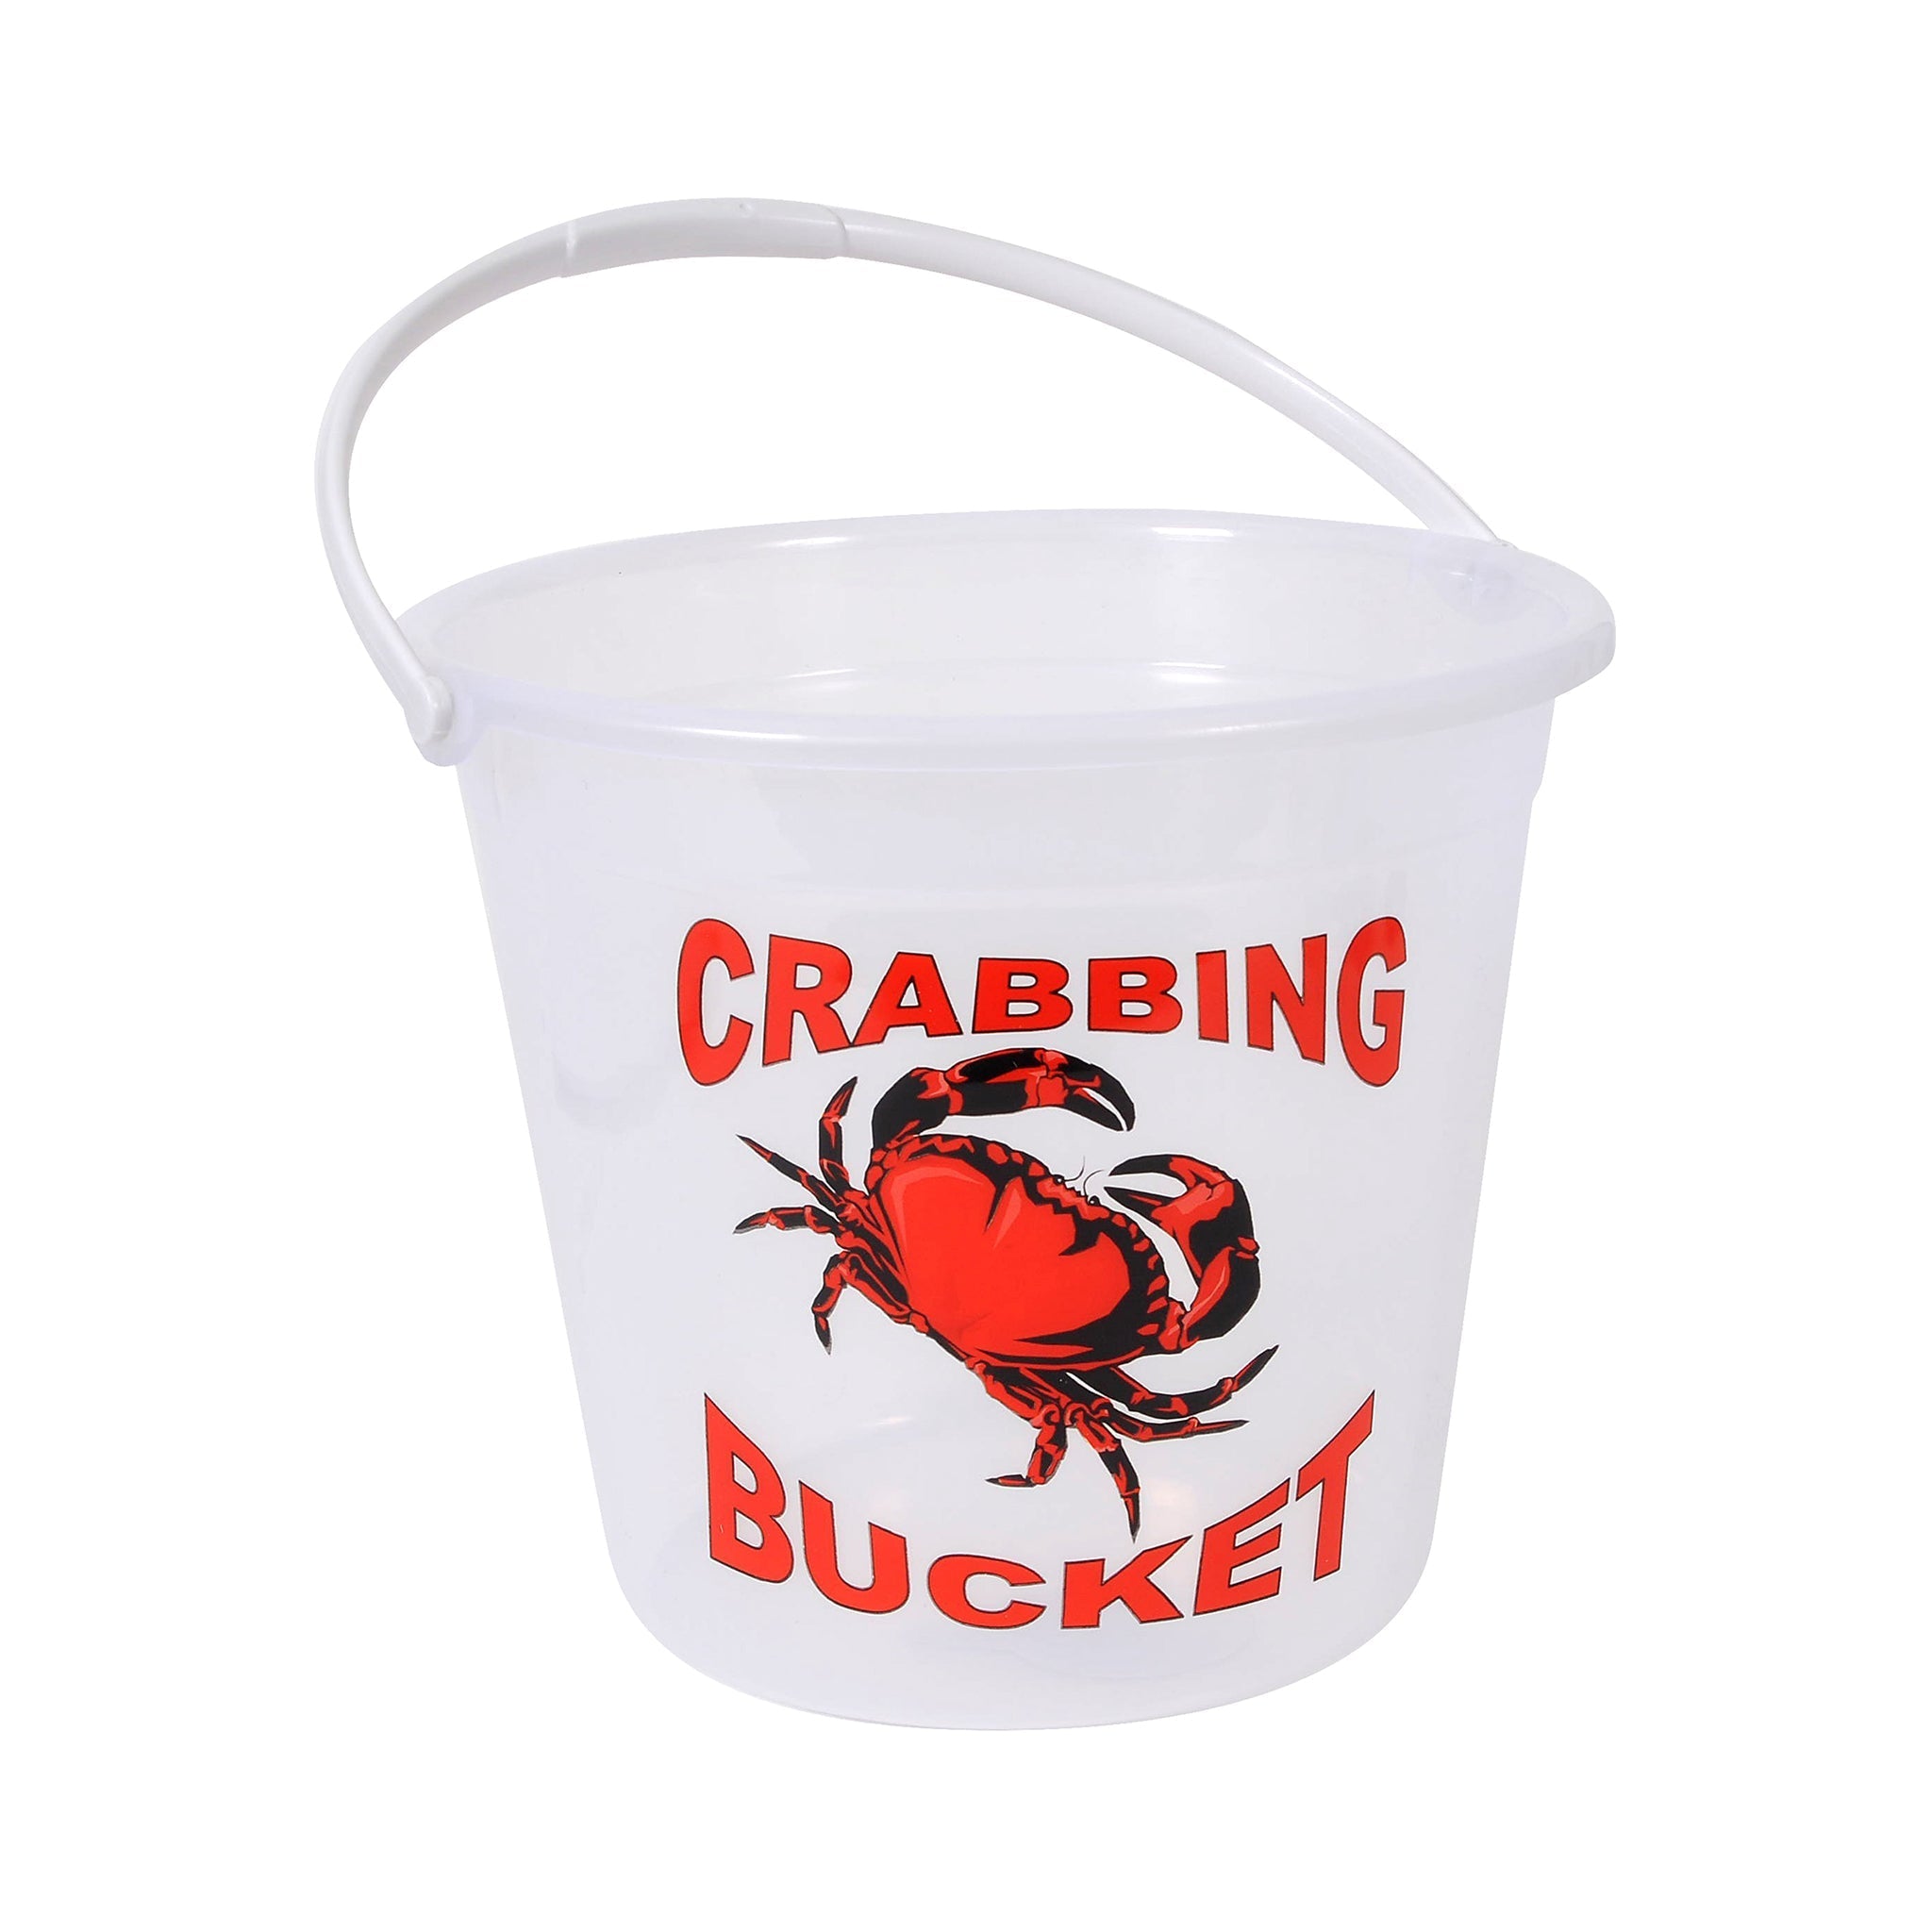 Crabbing Bucket, Large